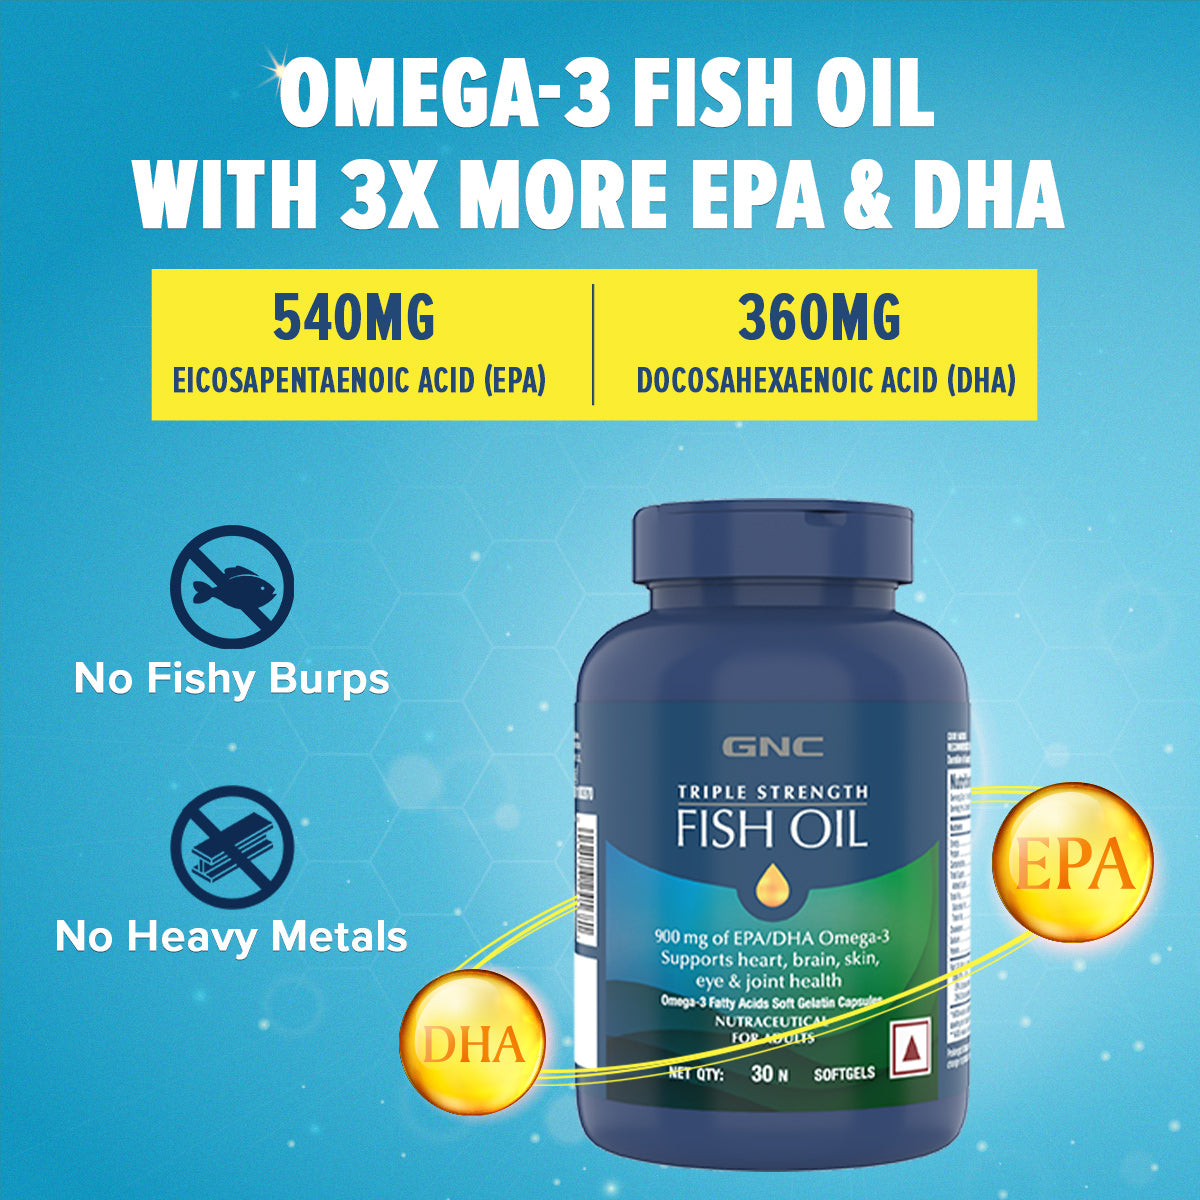 GNC Mega Men One Daily Multivitamin + Triple Strength Fish Oil - Omega 3 Capsules - 